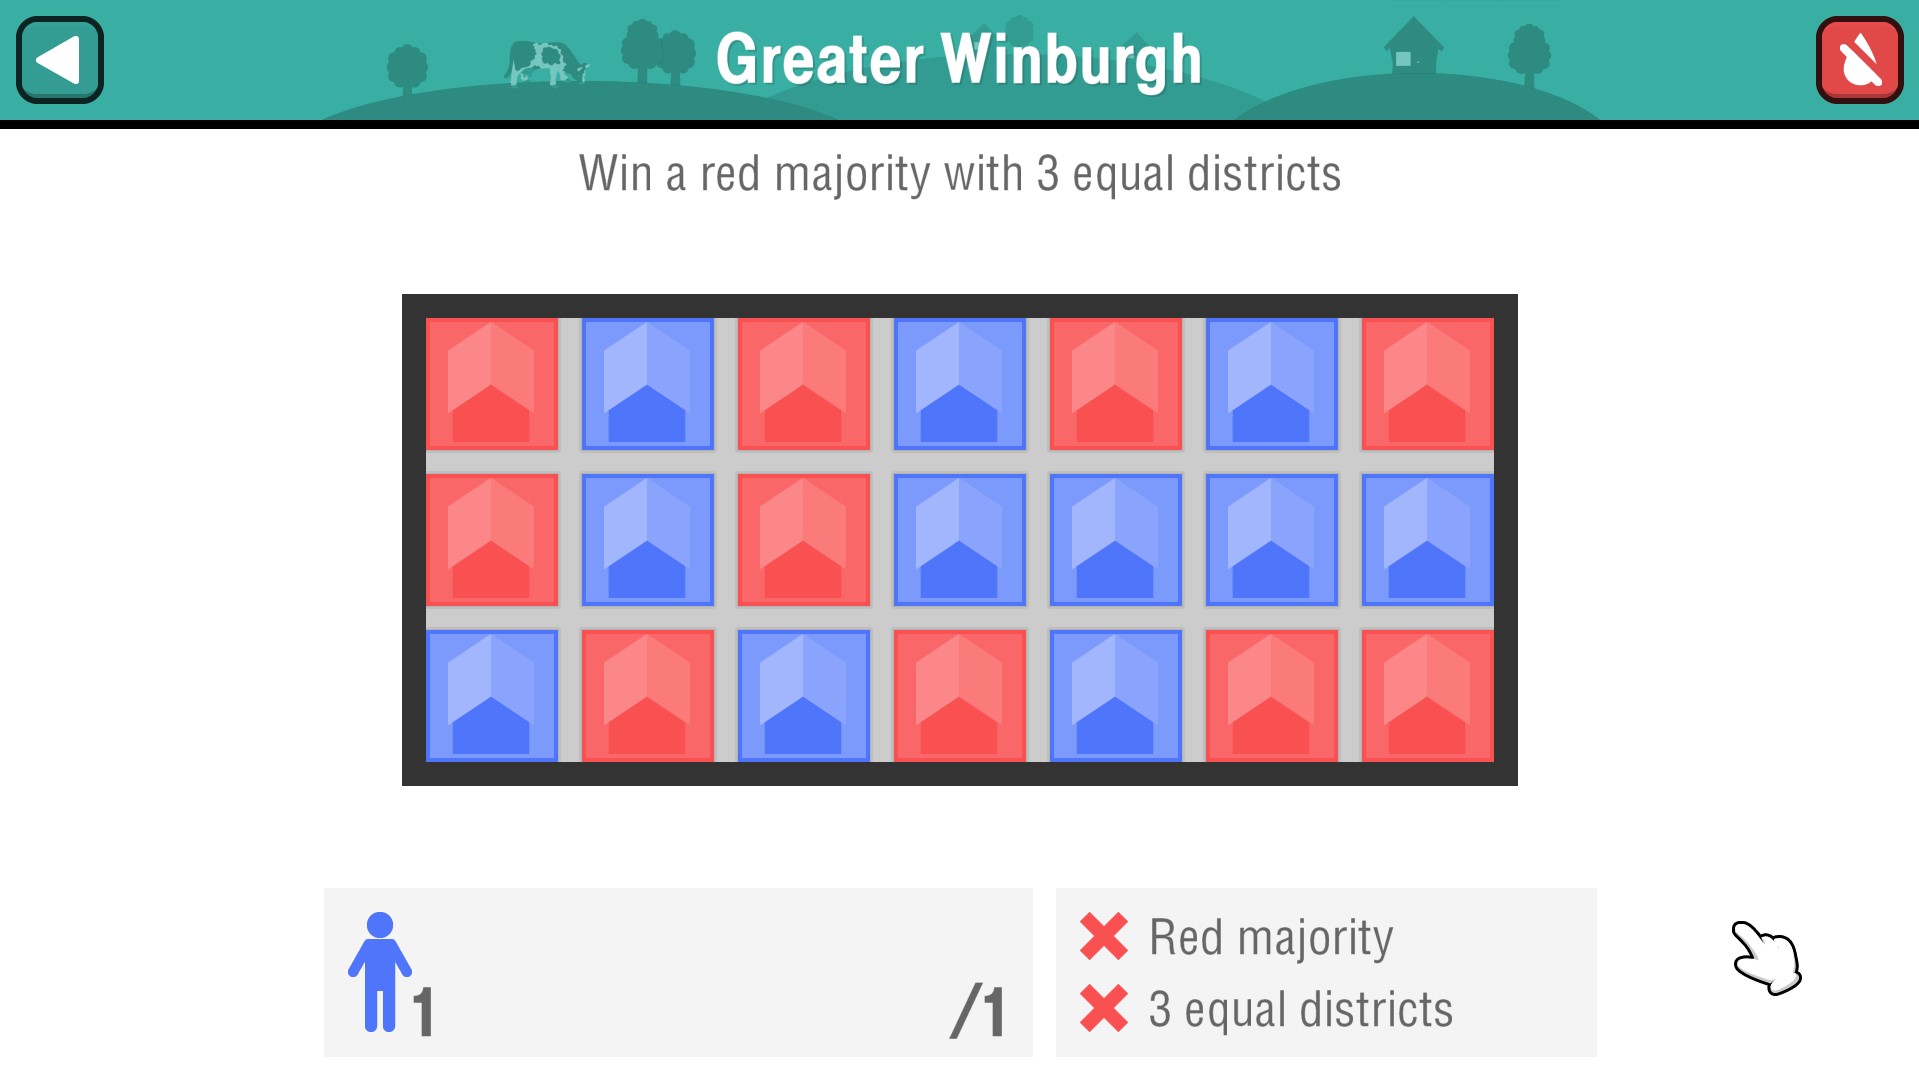 Greater Winburgh